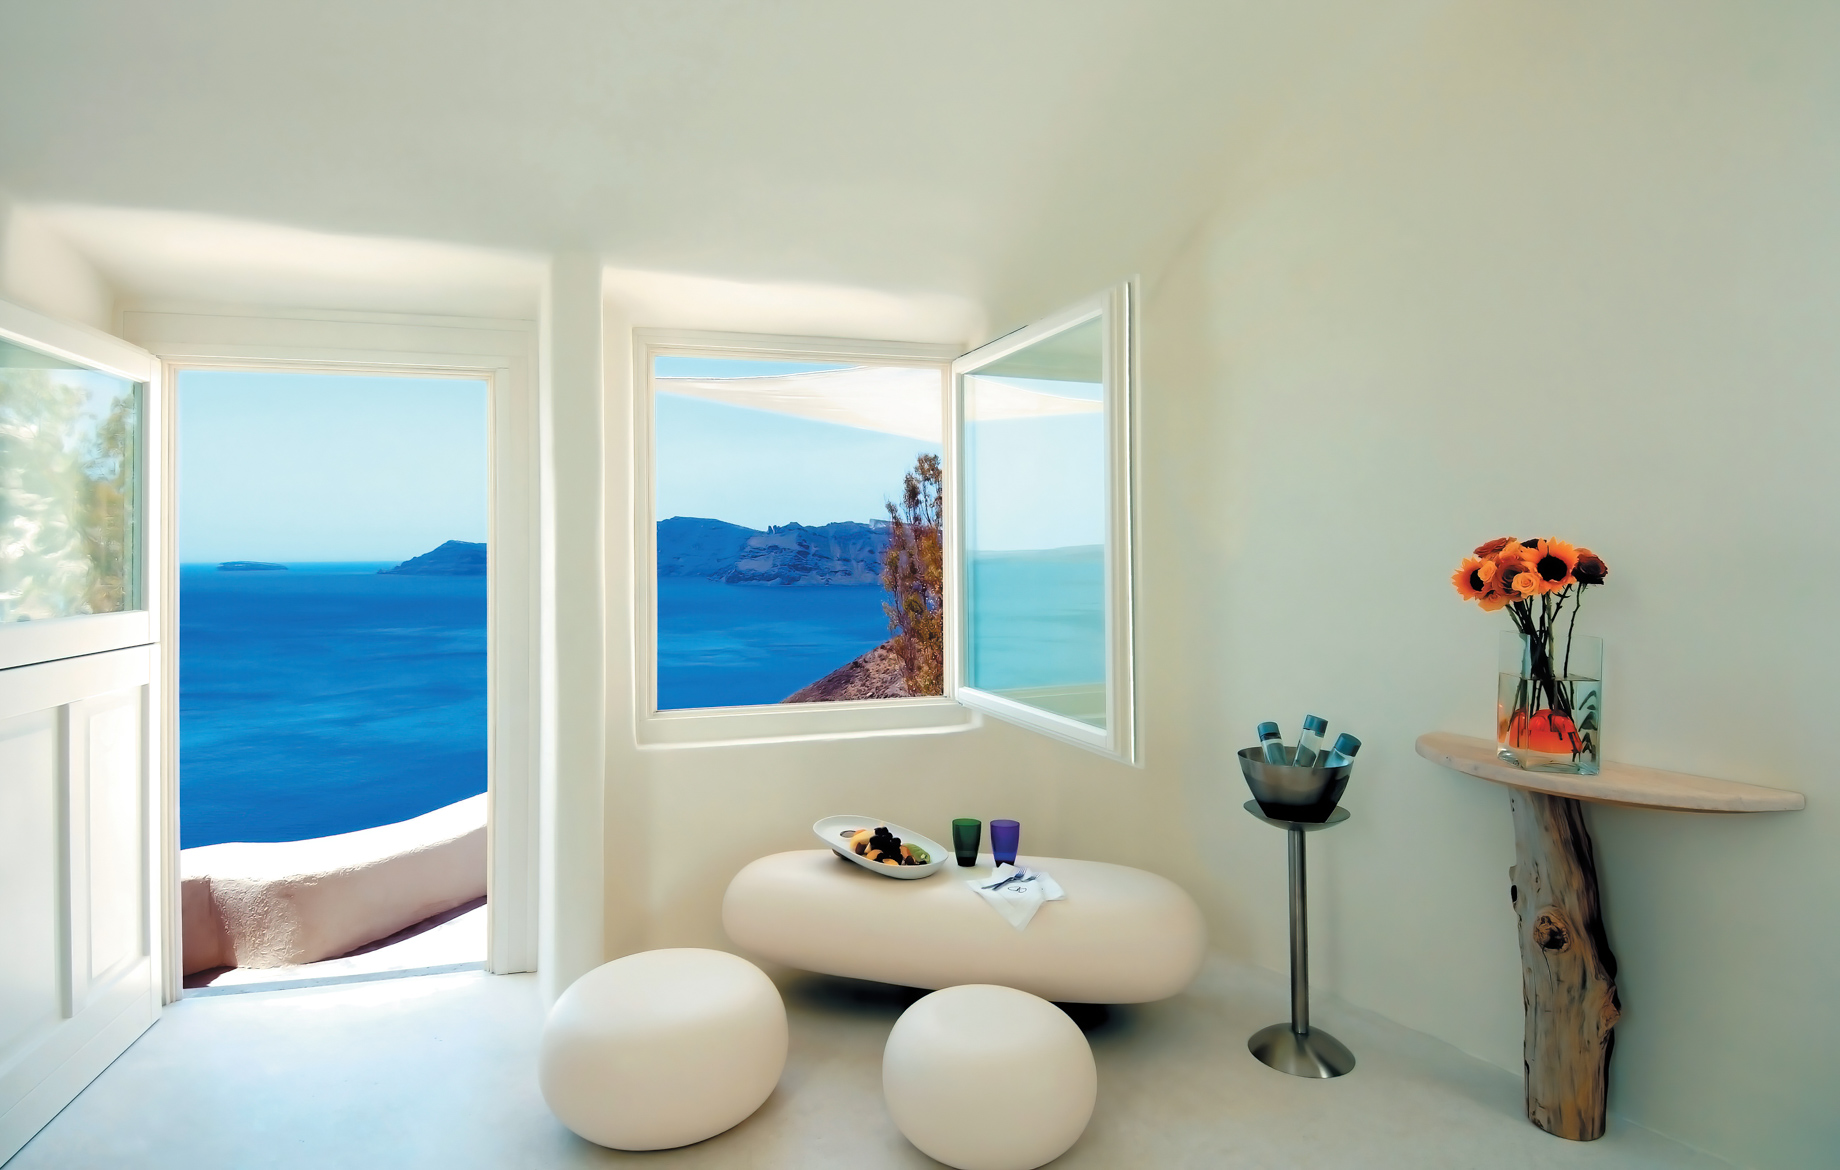 Mystique Hotel Santorini – Oia, Santorini Island, Greece – Ocean View Room